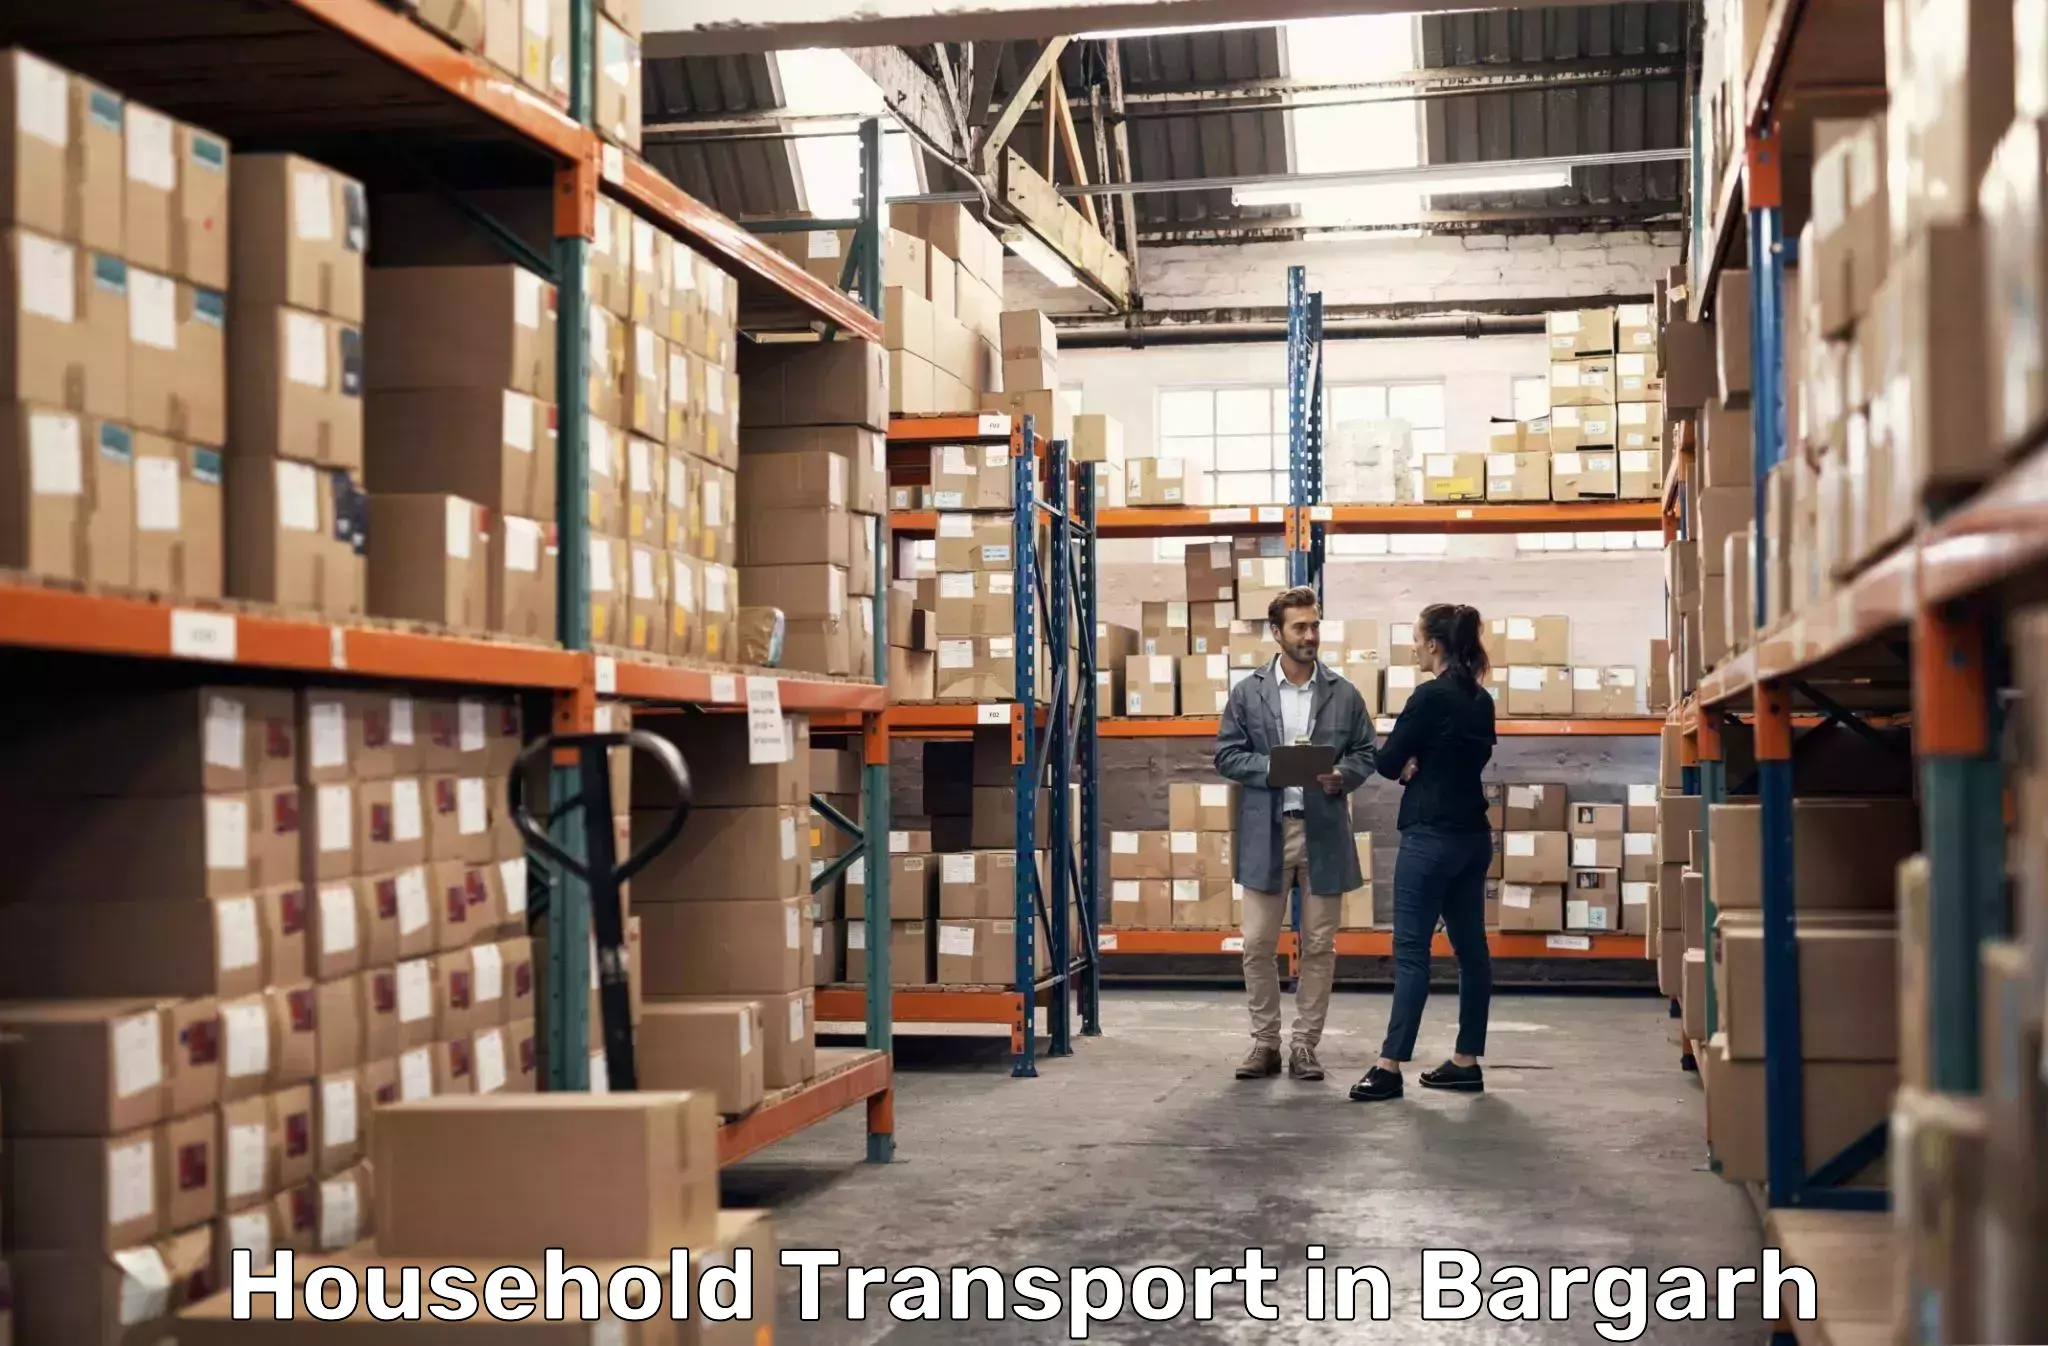 Household goods transport service in Bargarh